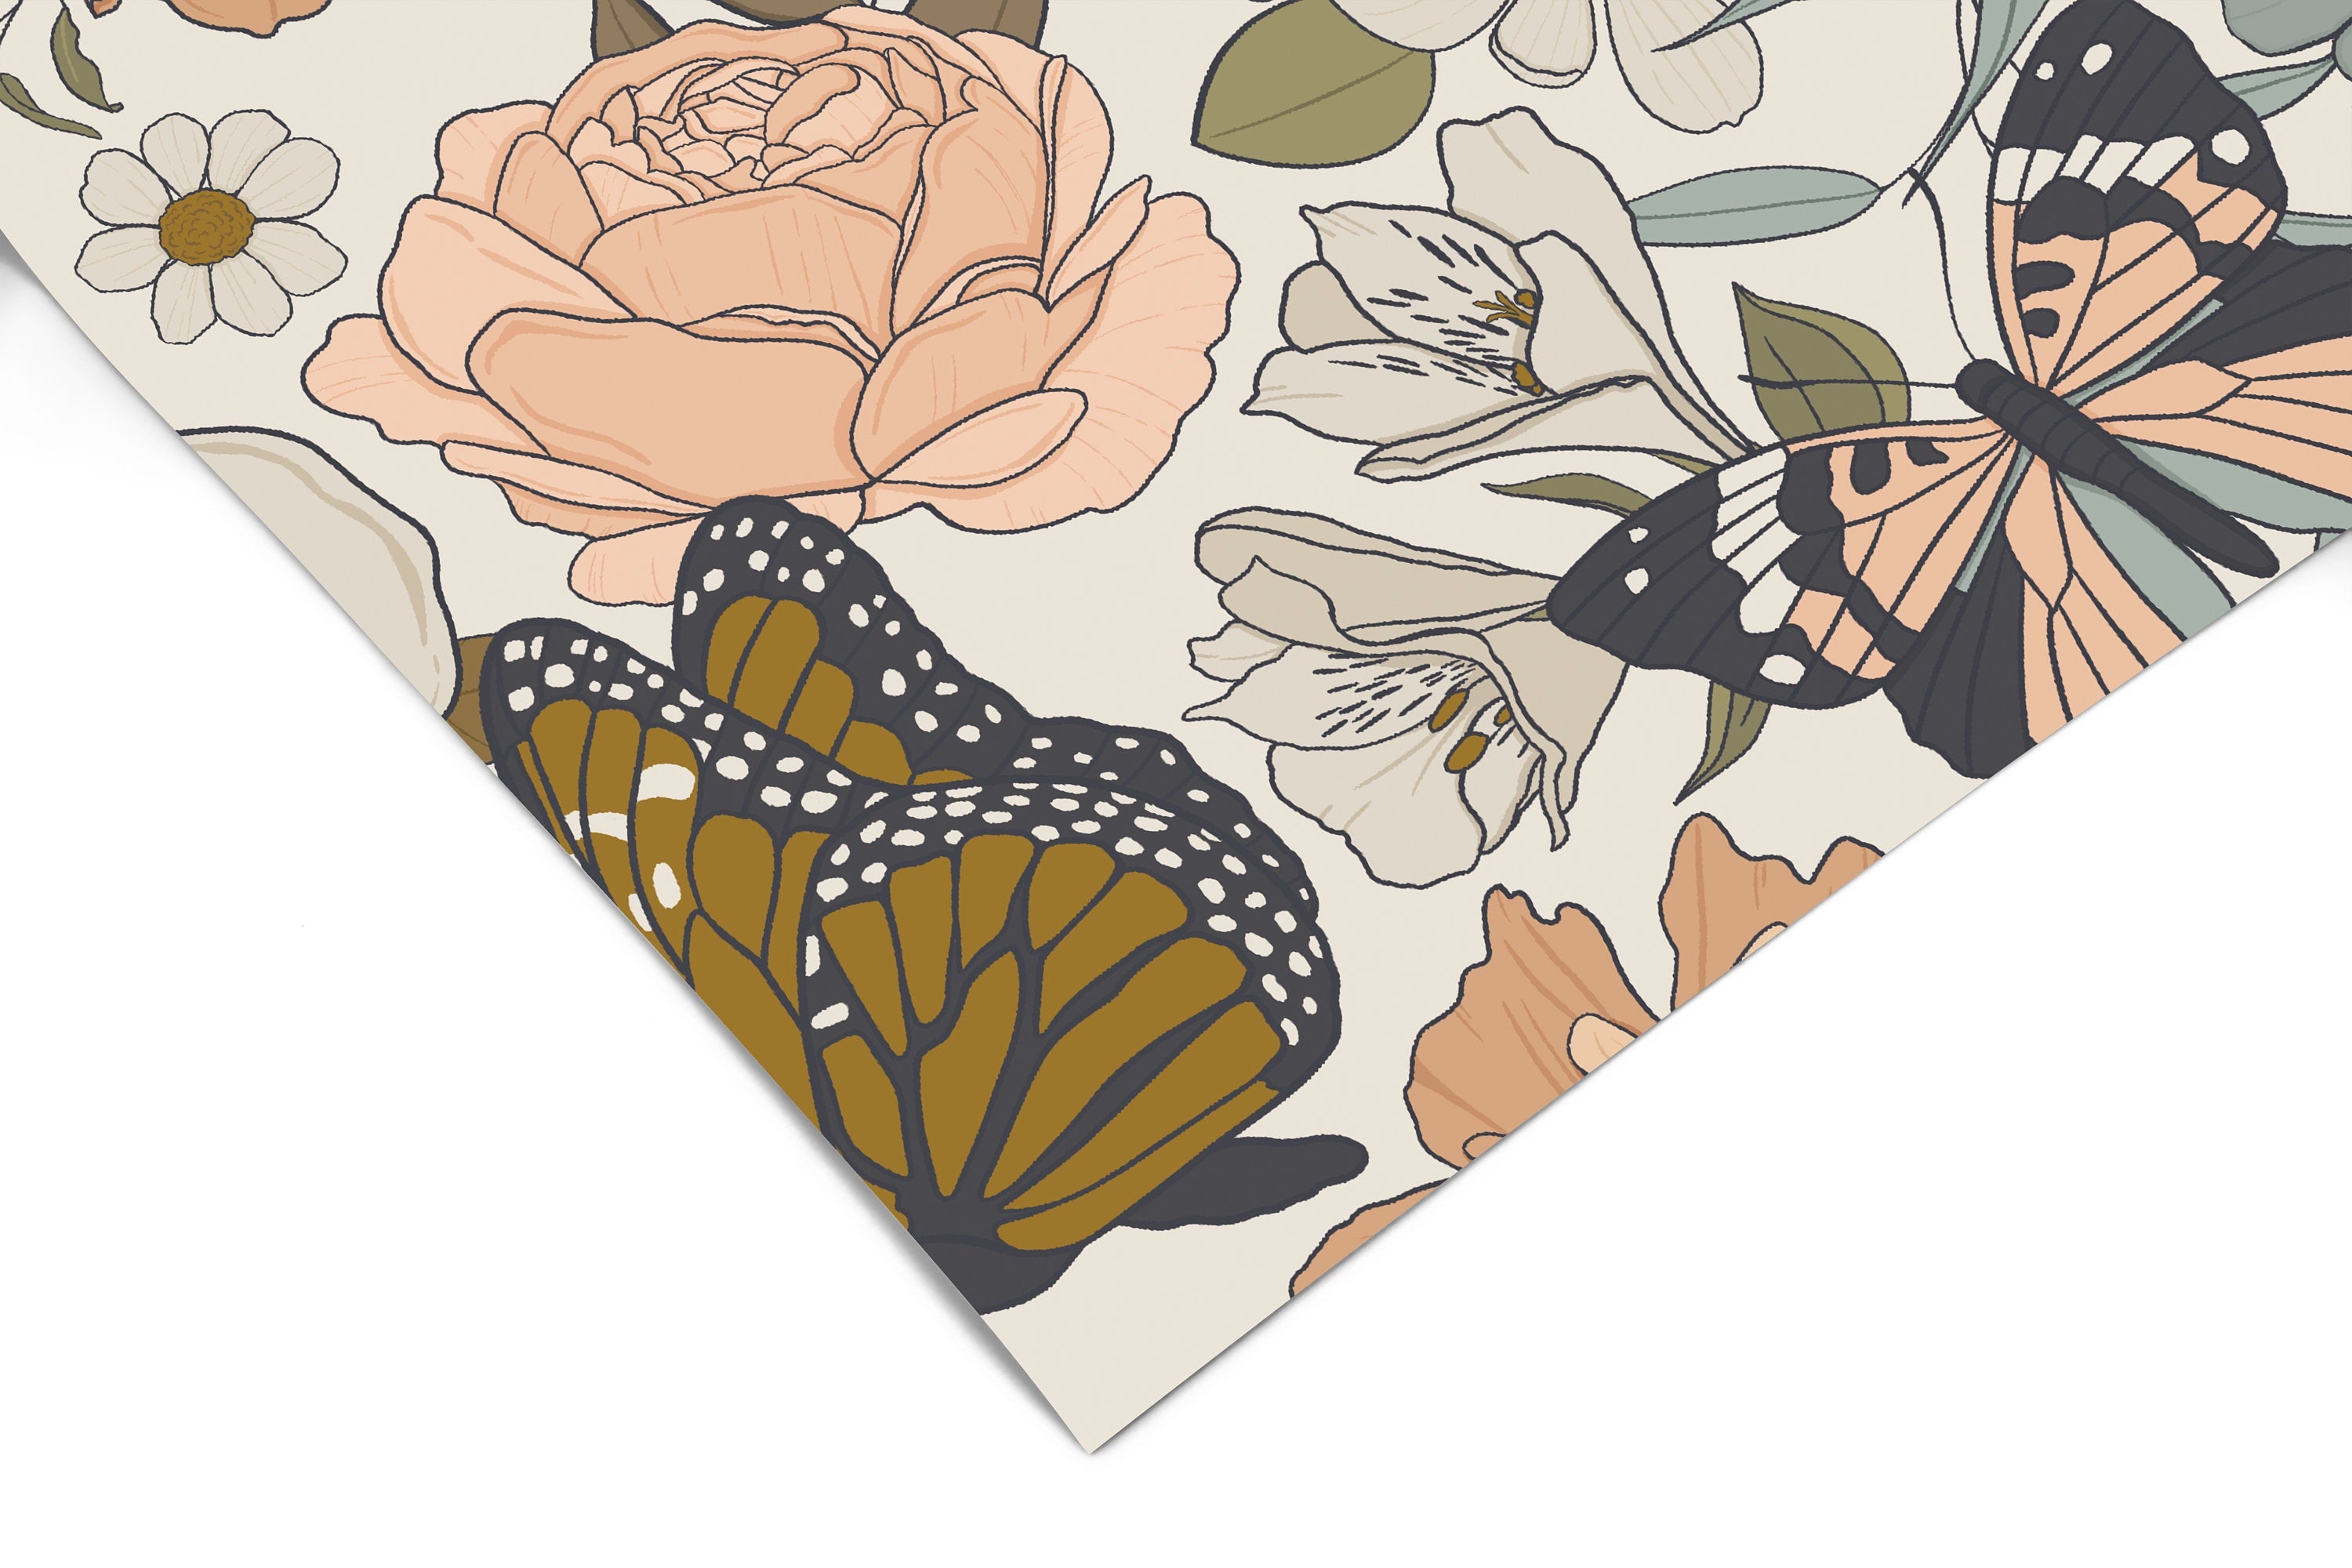 Floral Butterfly Boho Wallpaper | Girls Nursery Wallpaper | Kids Wallpaper | Childrens Wallpaper | Peel Stick Removable Wallpaper | 3838 - JamesAndColors